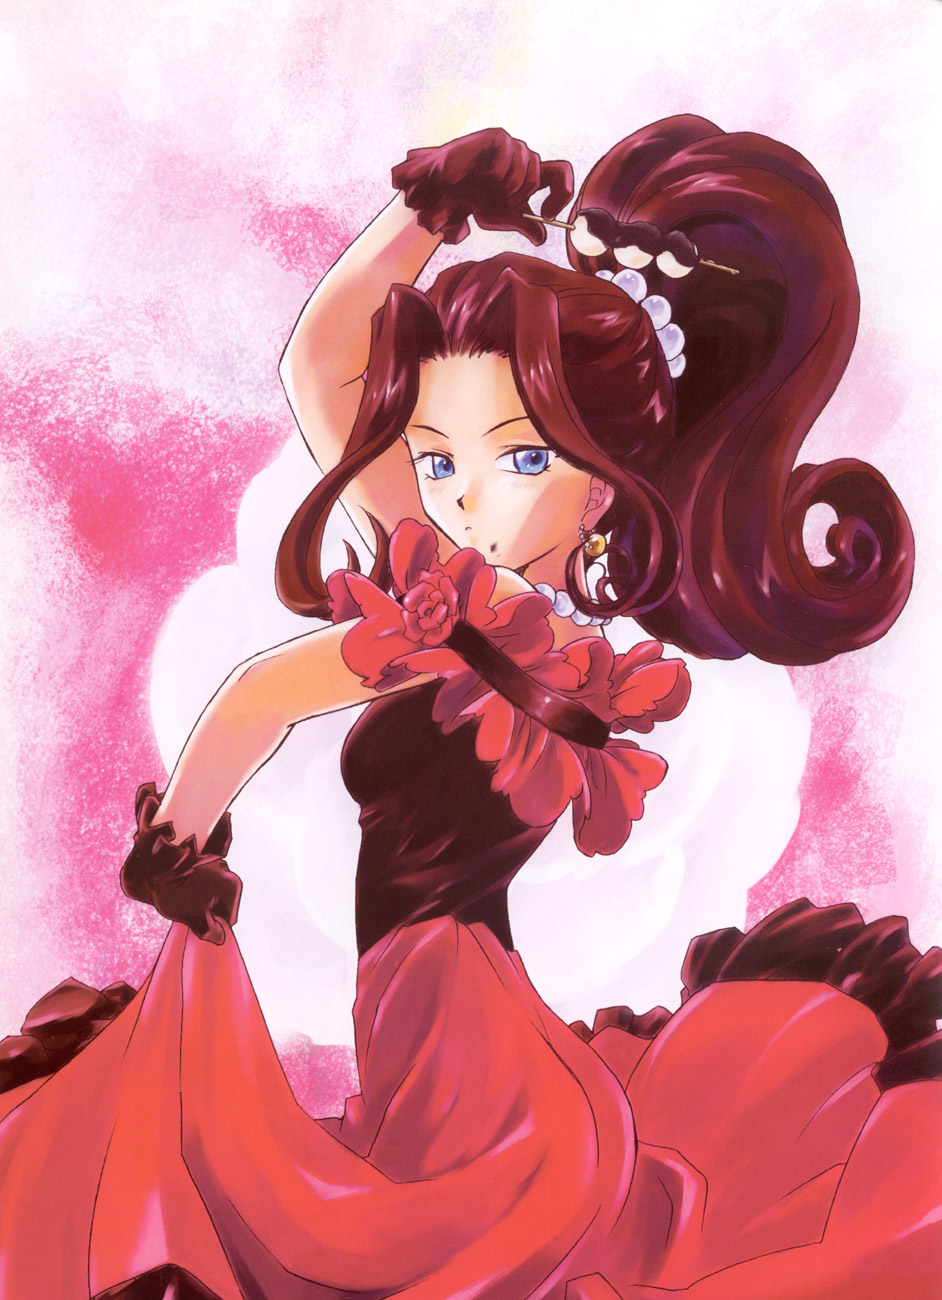 Sakura Wars illustrations: the Origin + Tribute image by Morimi Ashita